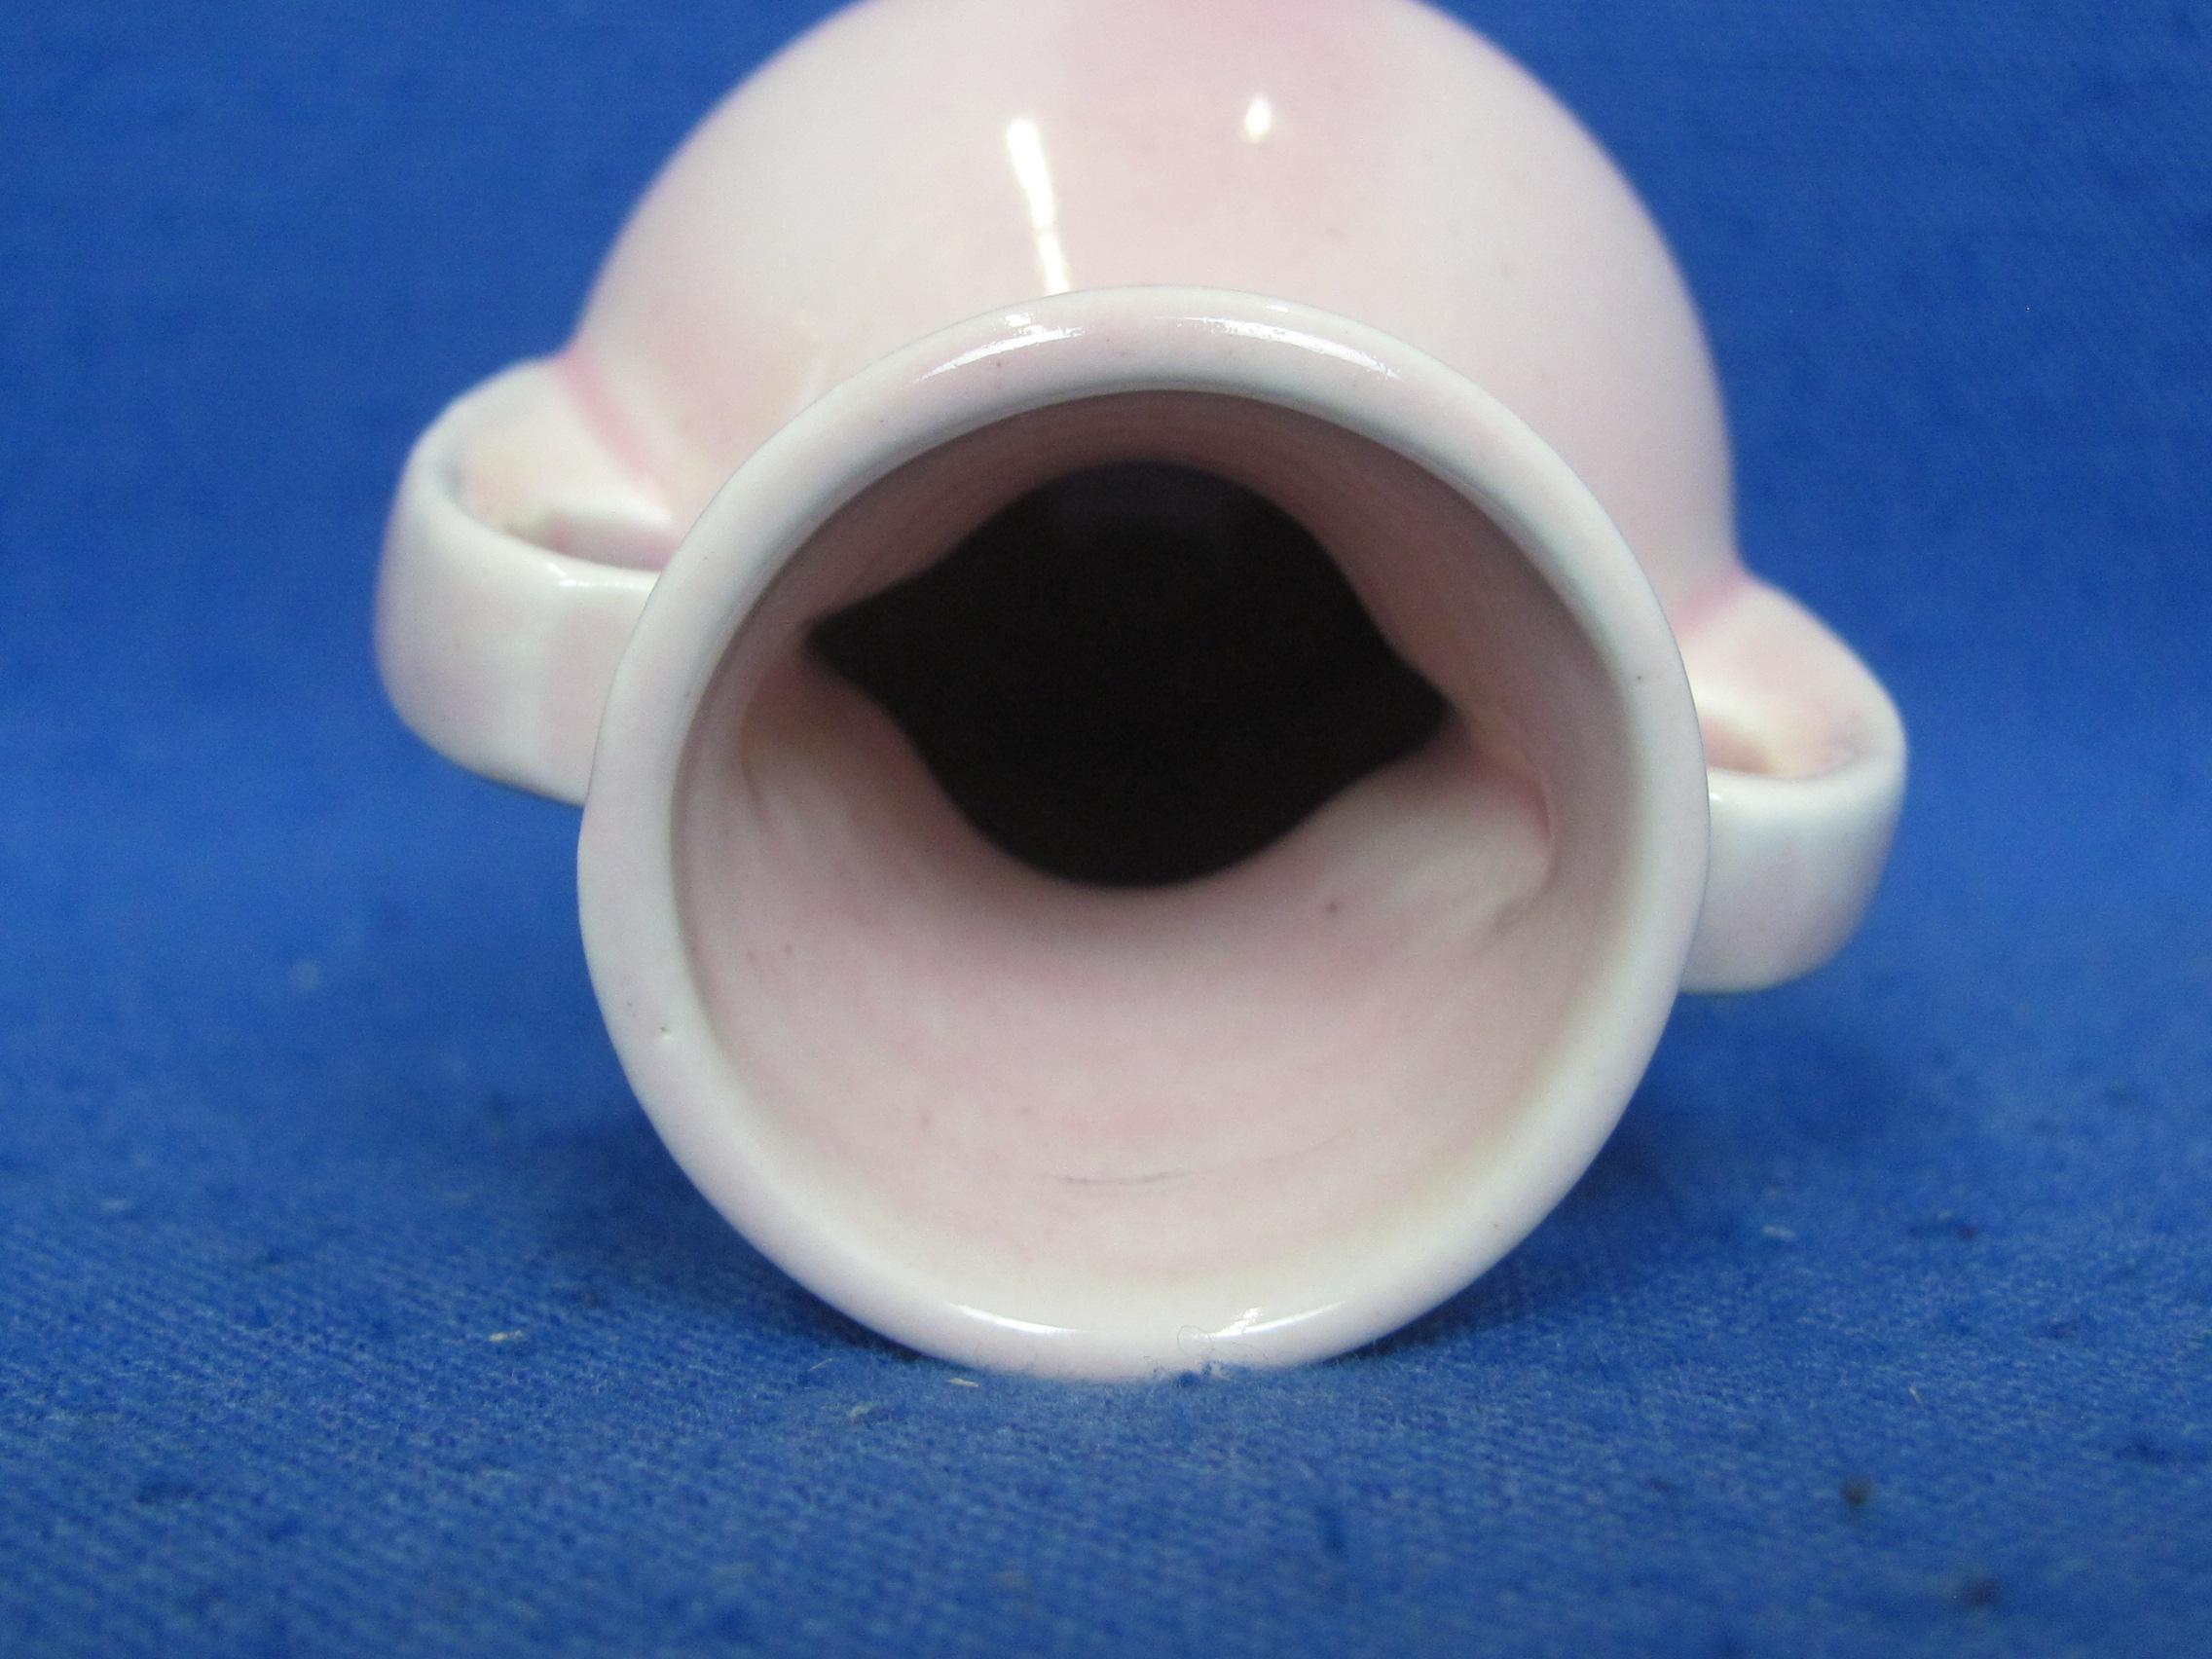 Shawnee Miniature Pink Vase & Small Pottery Cornucopia Planter – Vase is 3” tall